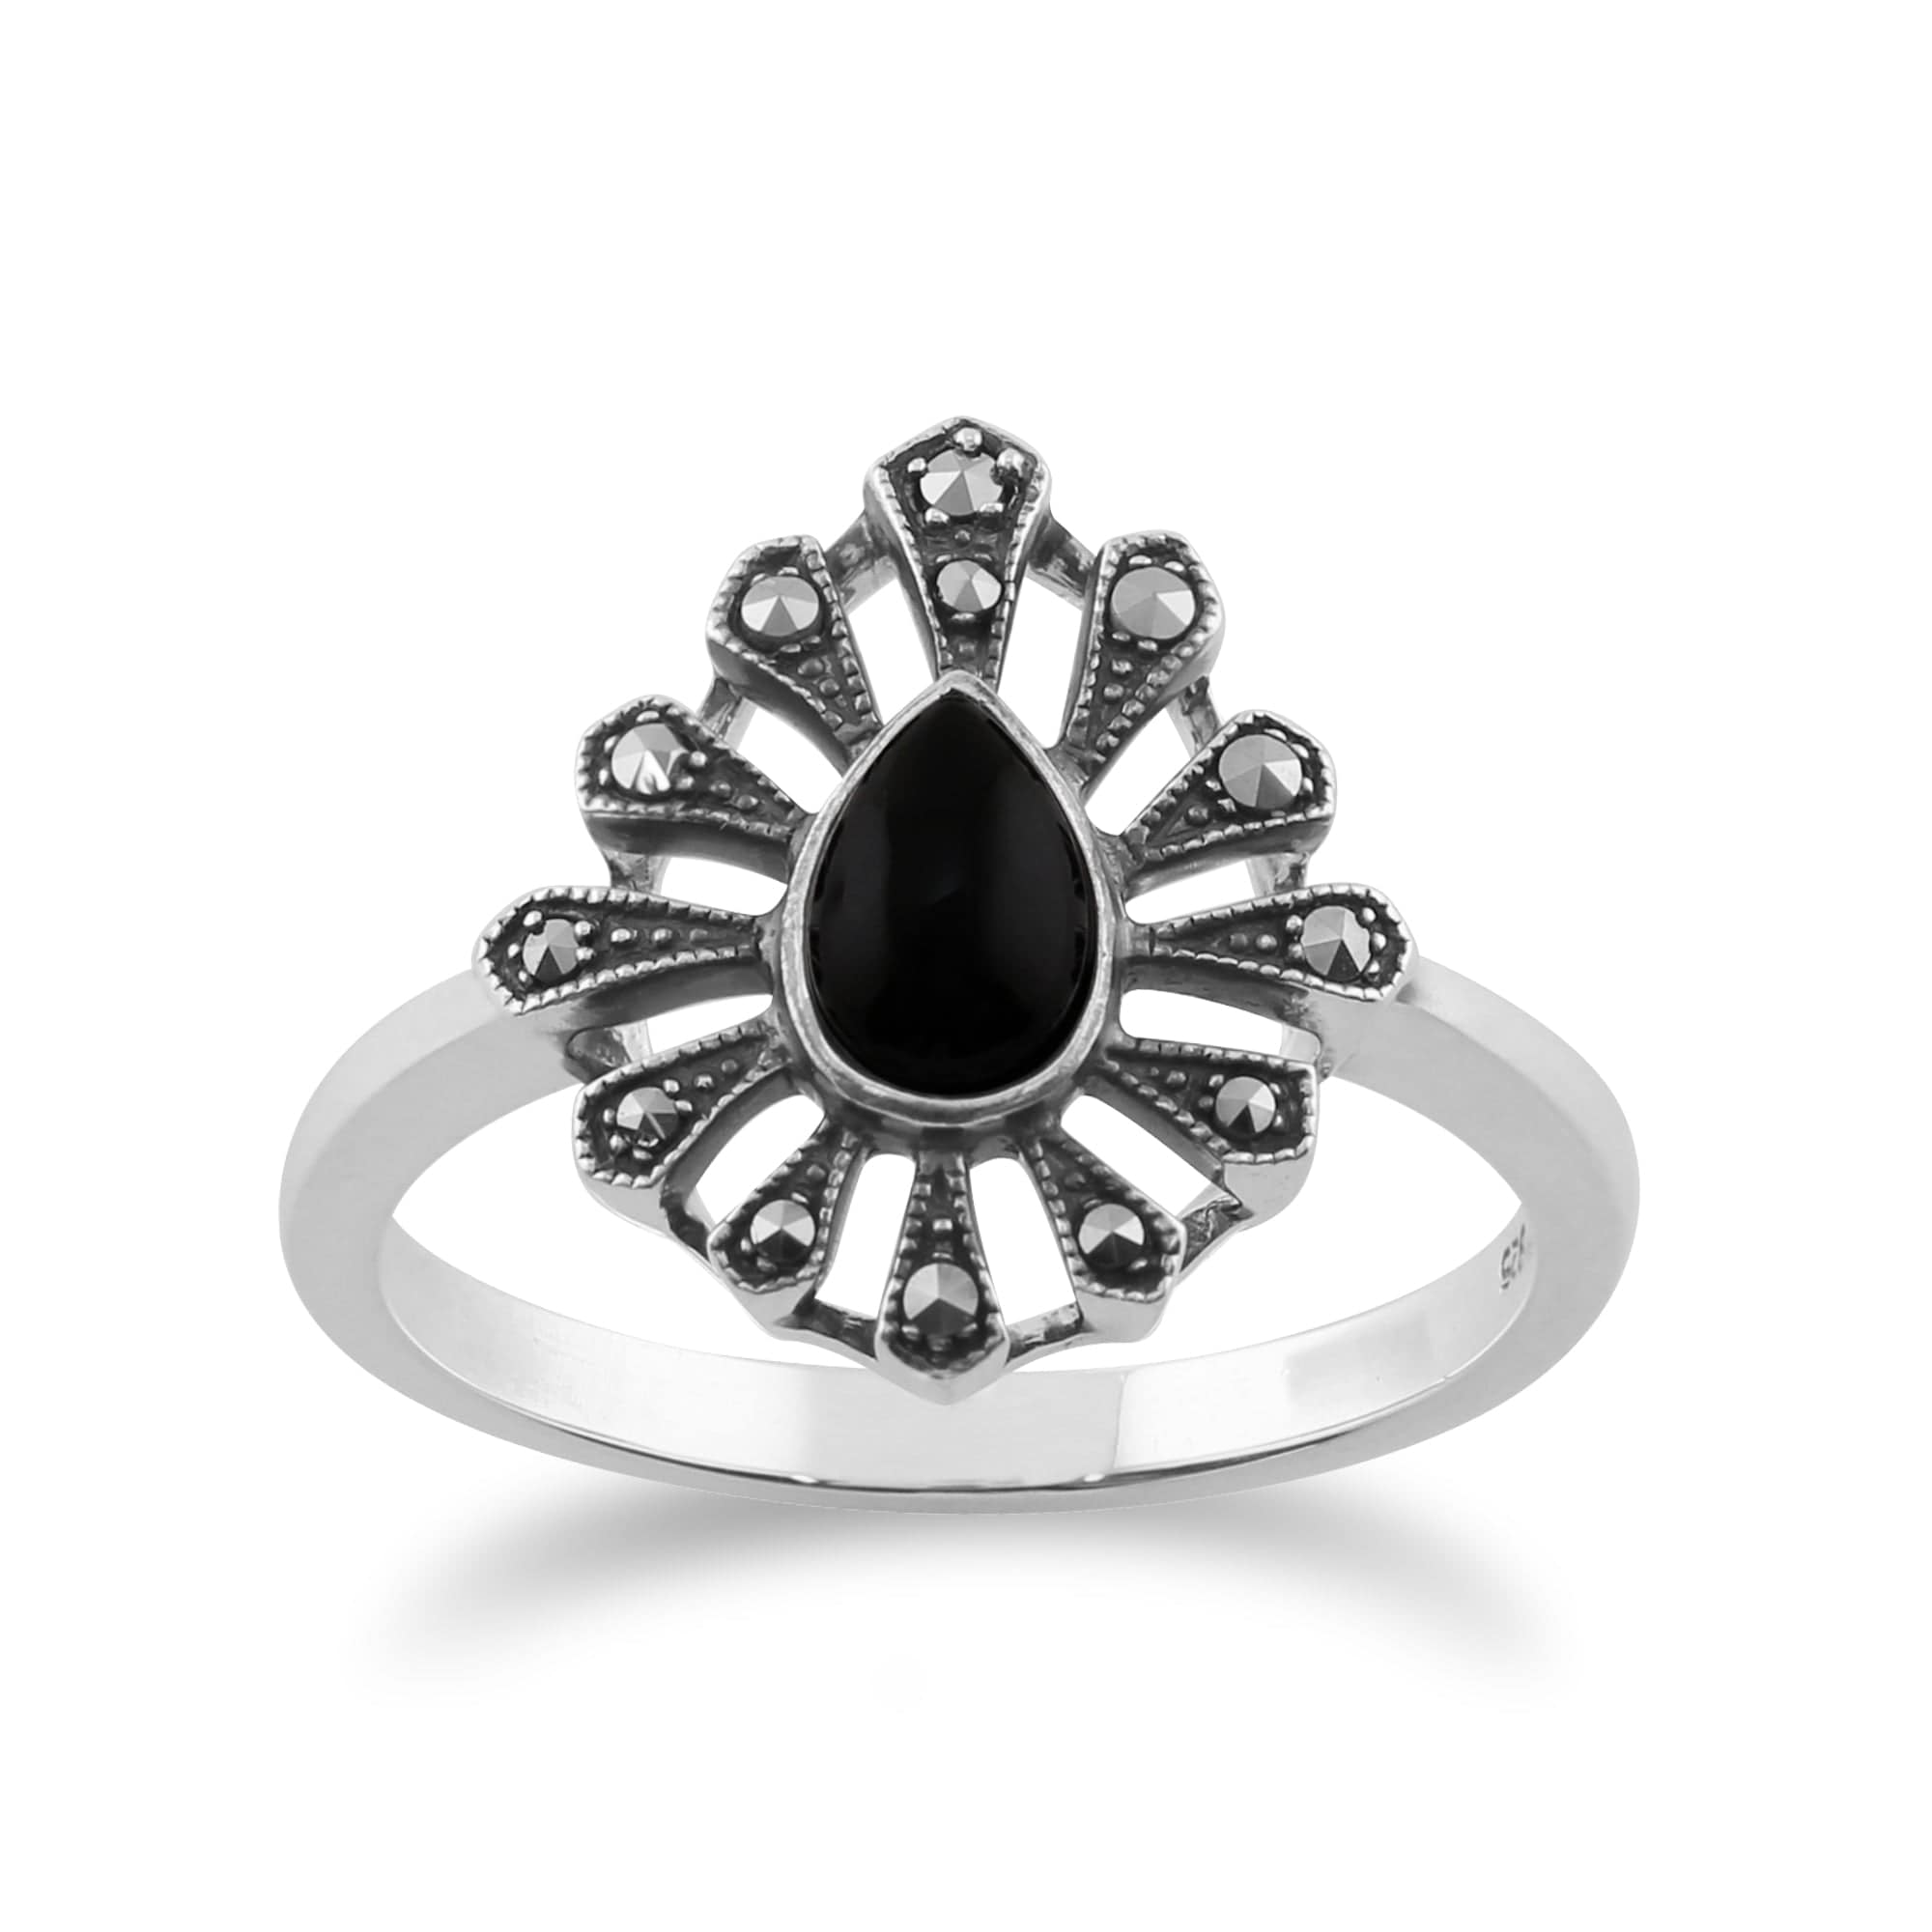 Gemondo 925 Sterling Silver 0.30ct Black Onyx & Marcasite Art Deco Ring Image 1